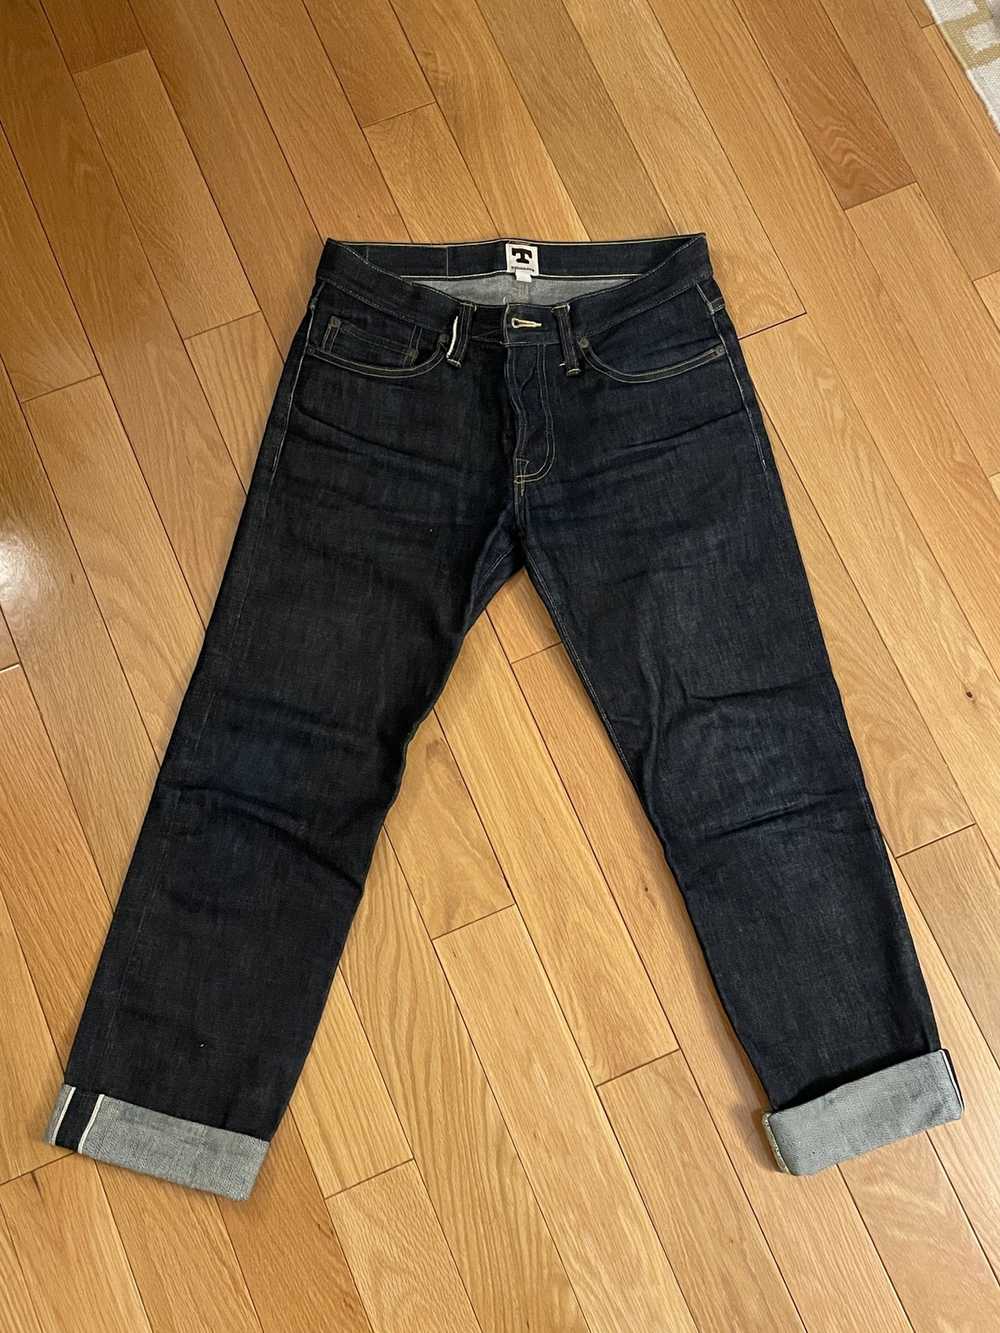 Tellason White oak cone denim selvage jeans size 30 made in USA faded